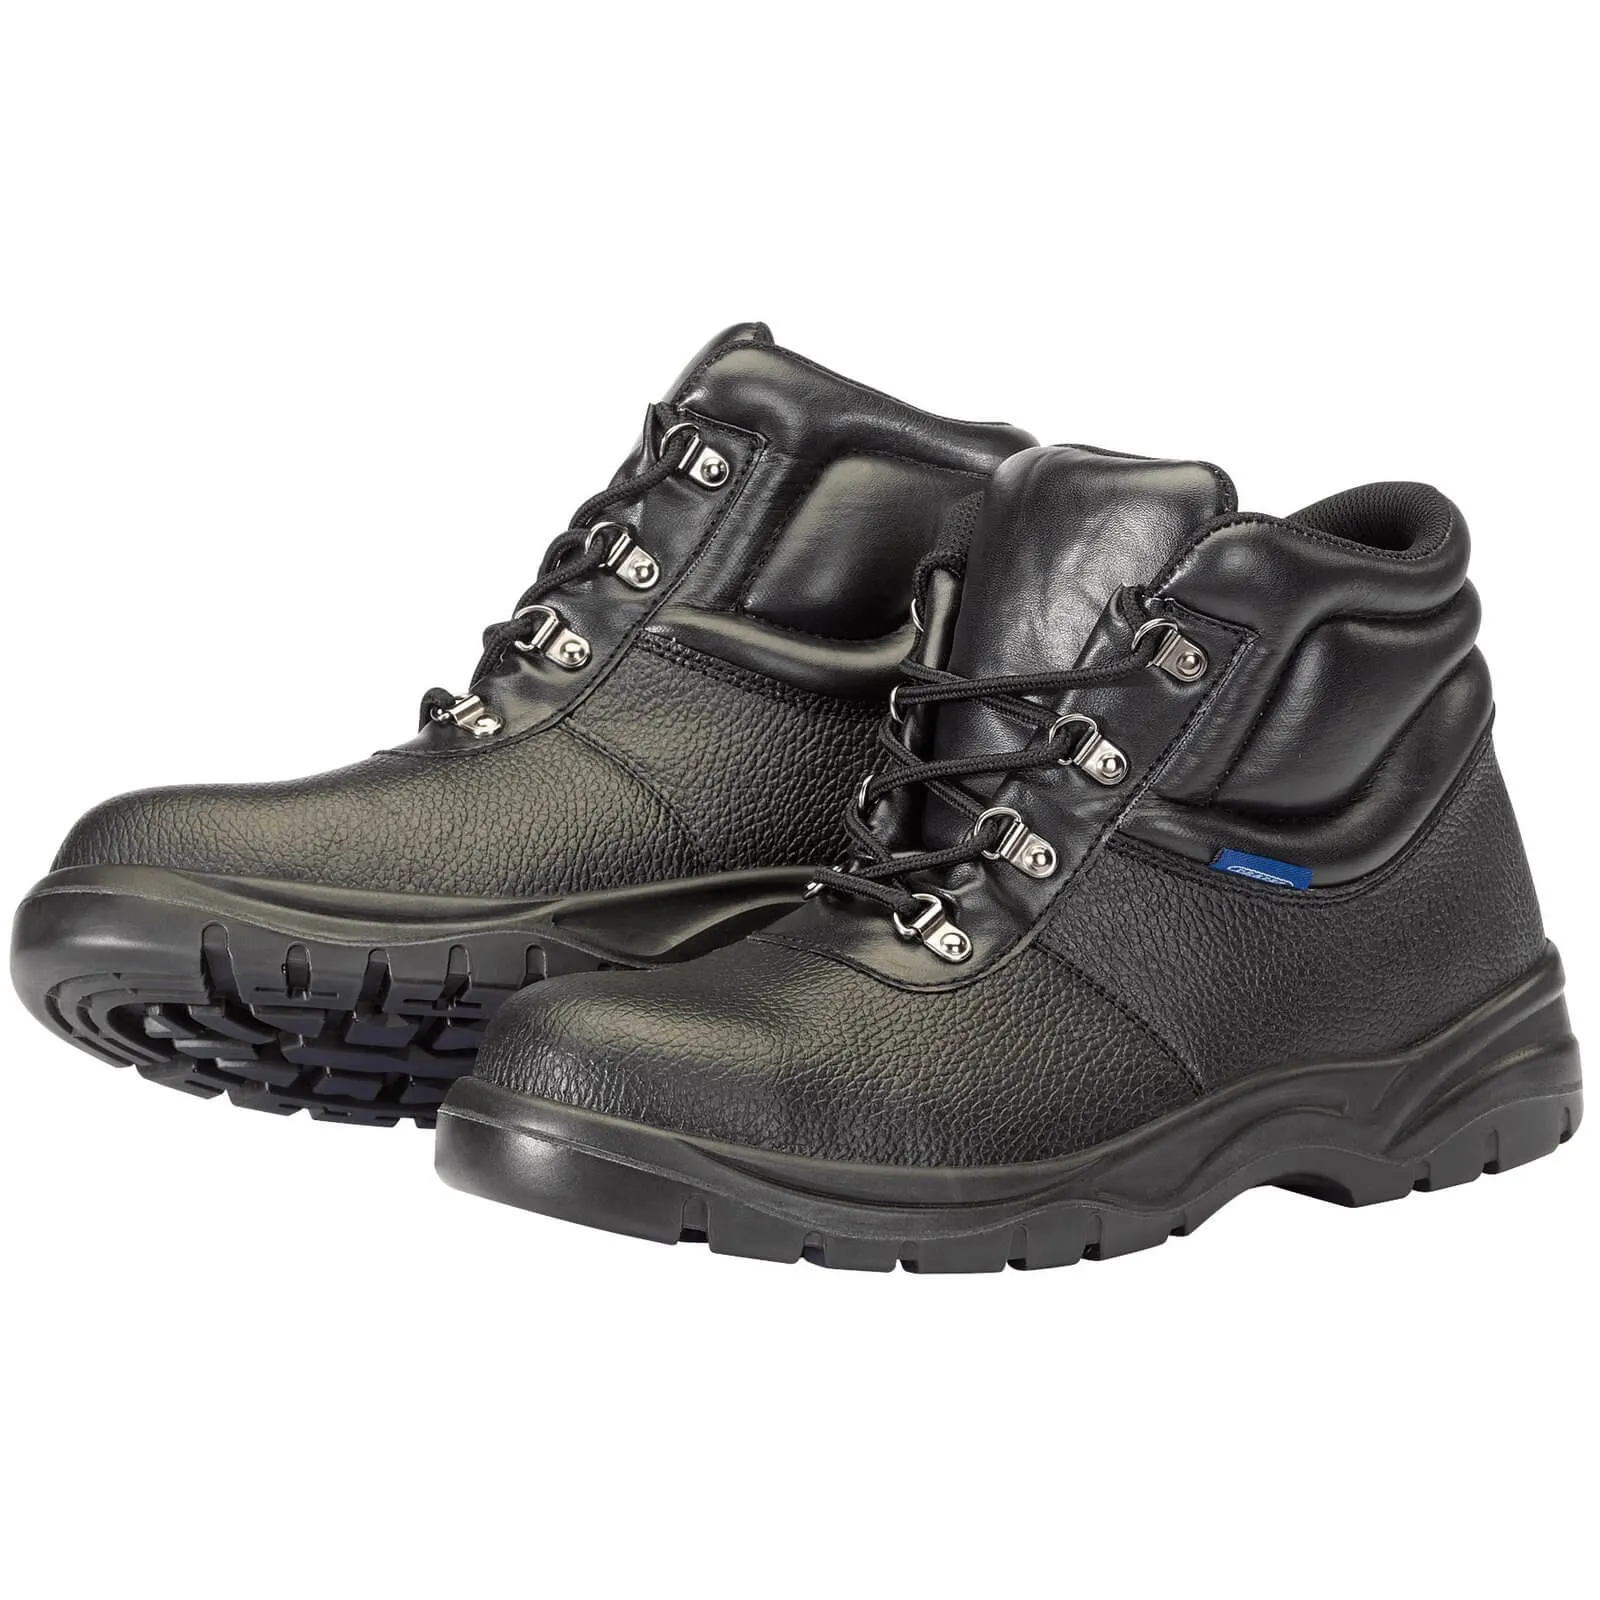 Draper Mens Chukka Style Safety Boots - Black, Size 9